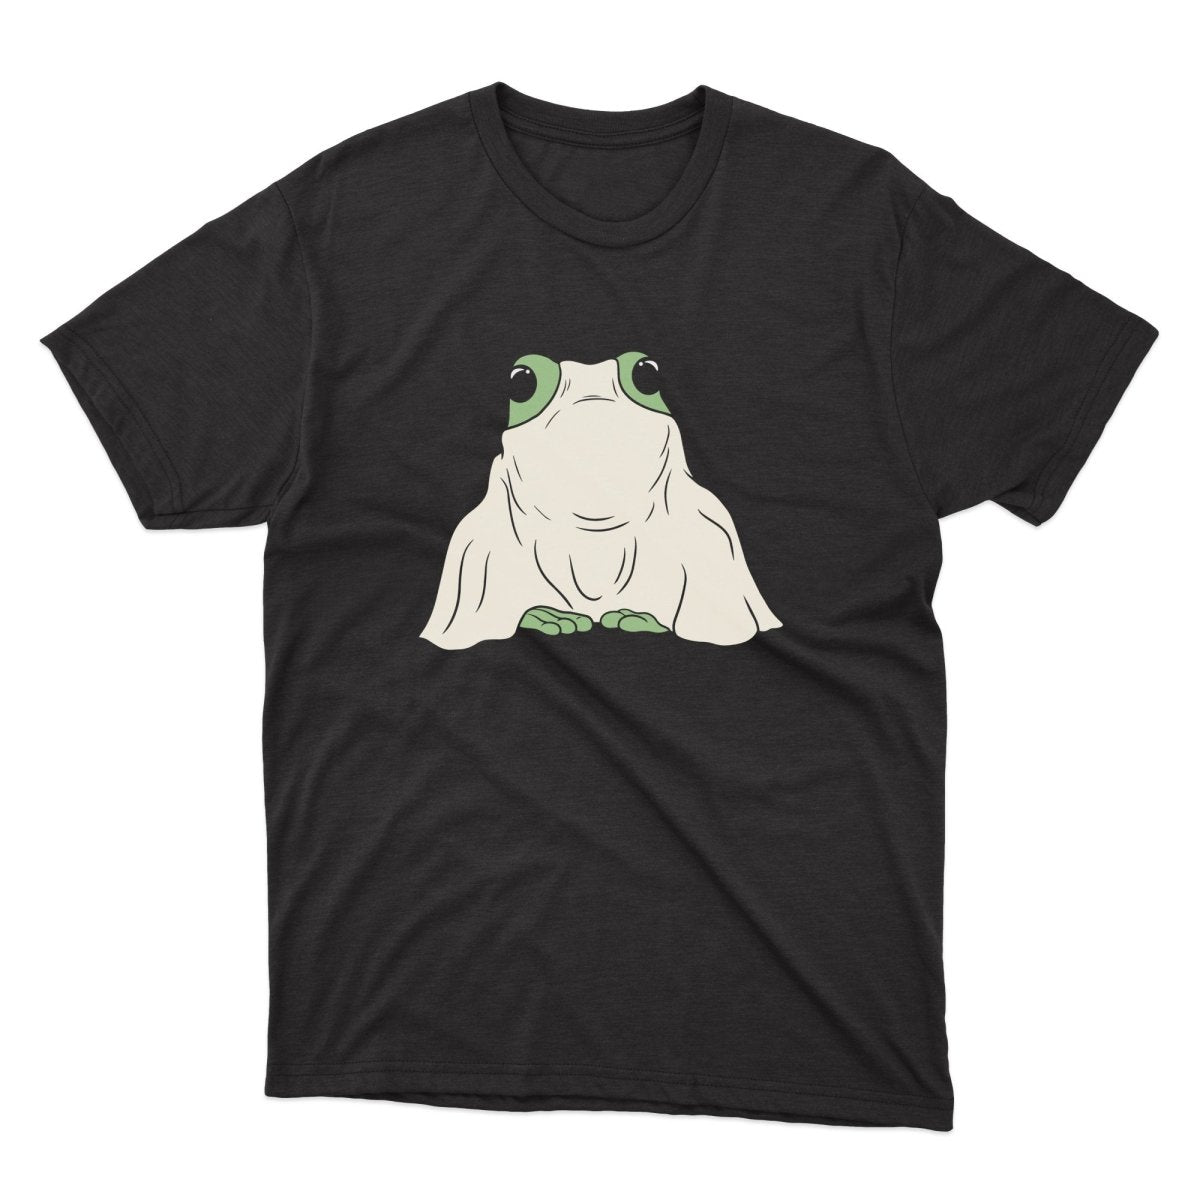 Ghost Frog Shirt - stickerbullGhost Frog ShirtShirtsPrintifystickerbull17916079604373806181WhiteMa black t - shirt with a frog on it's chest